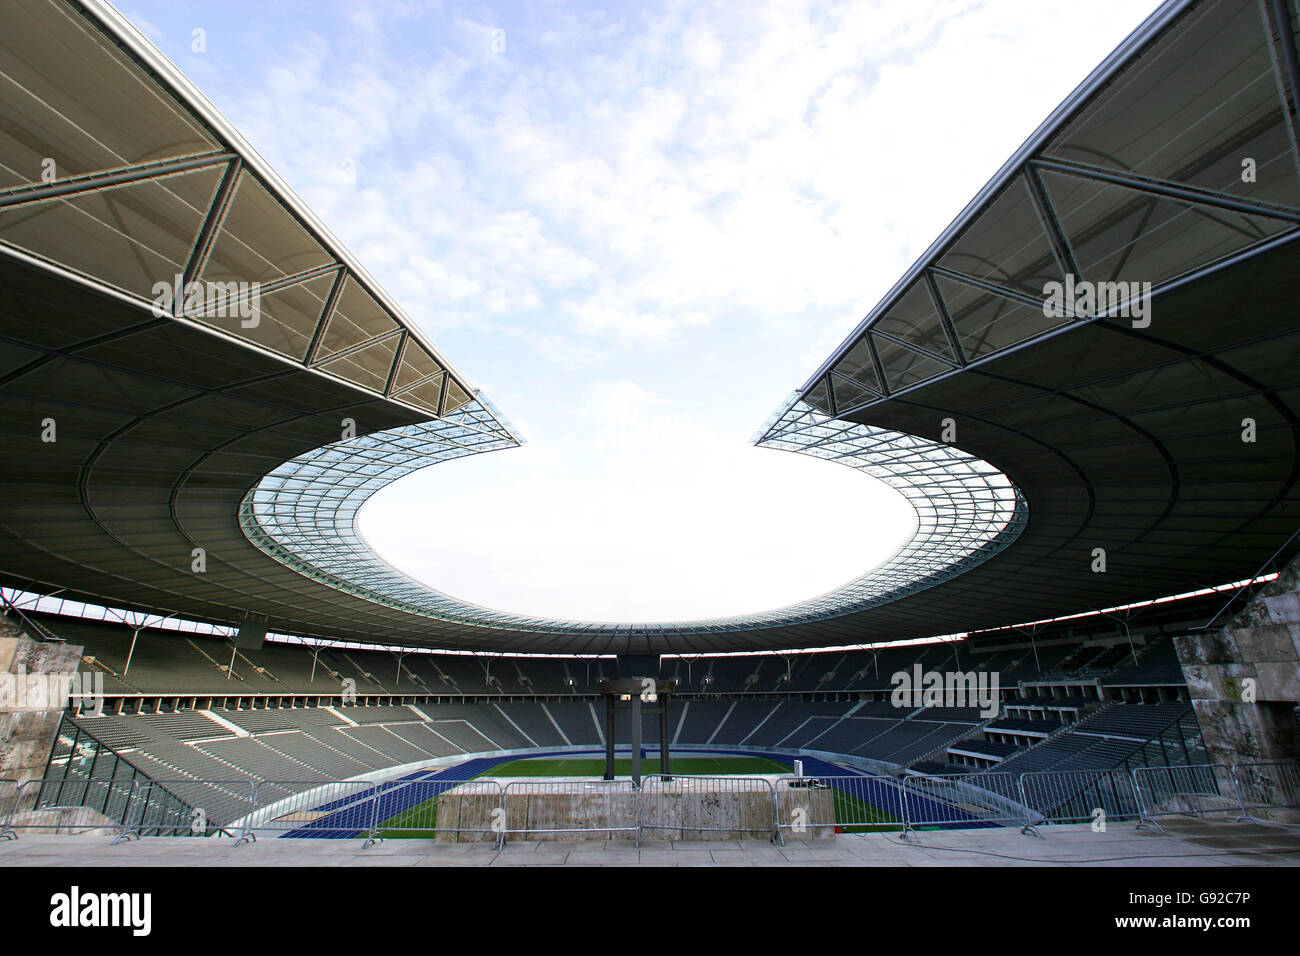 Soccer - FIFA World Cup 2006 Stadiums - Olympiastadion - Berlin Stock Photo